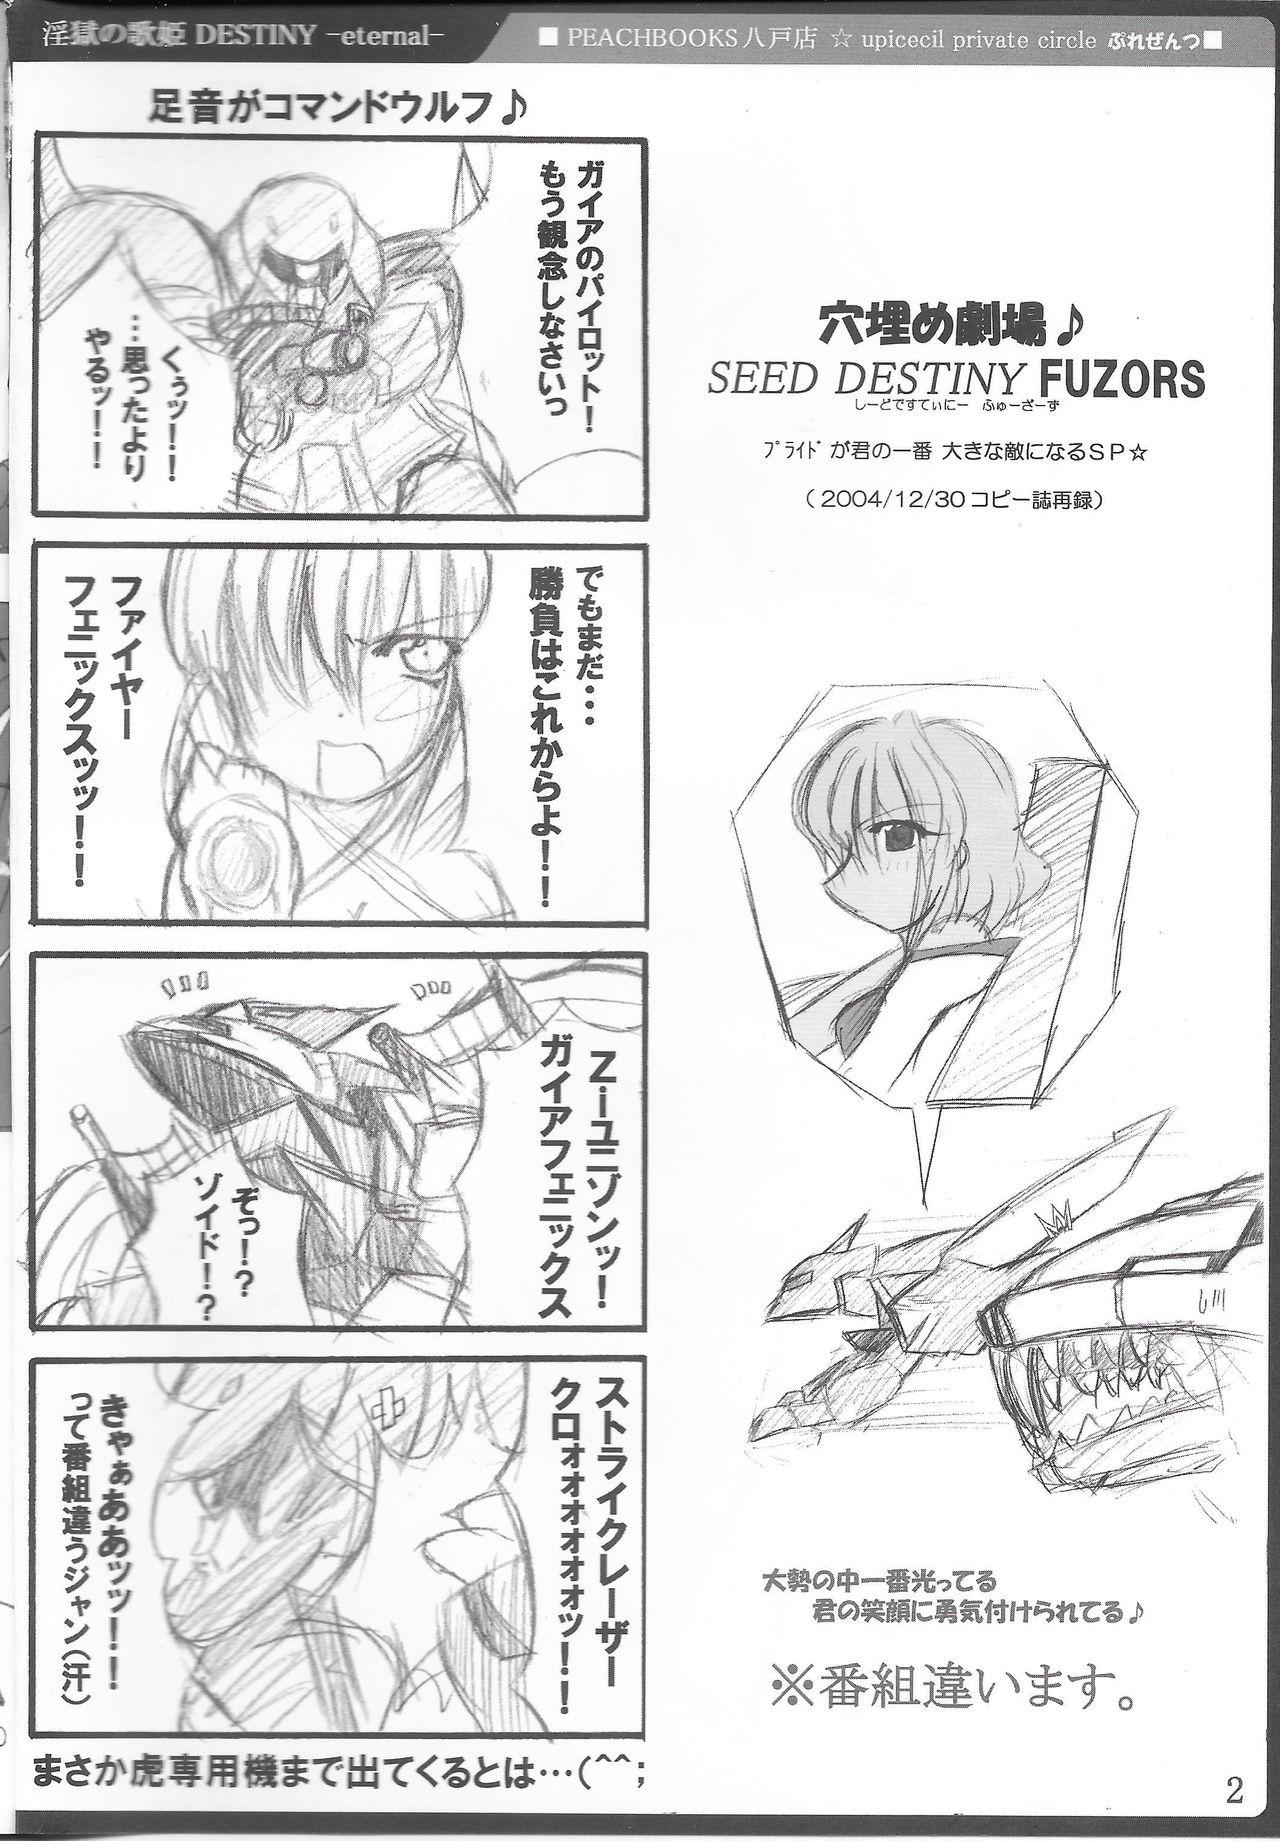 Asshole Ingoku no Utahime DESTINY - Gundam seed destiny Beautiful - Page 3